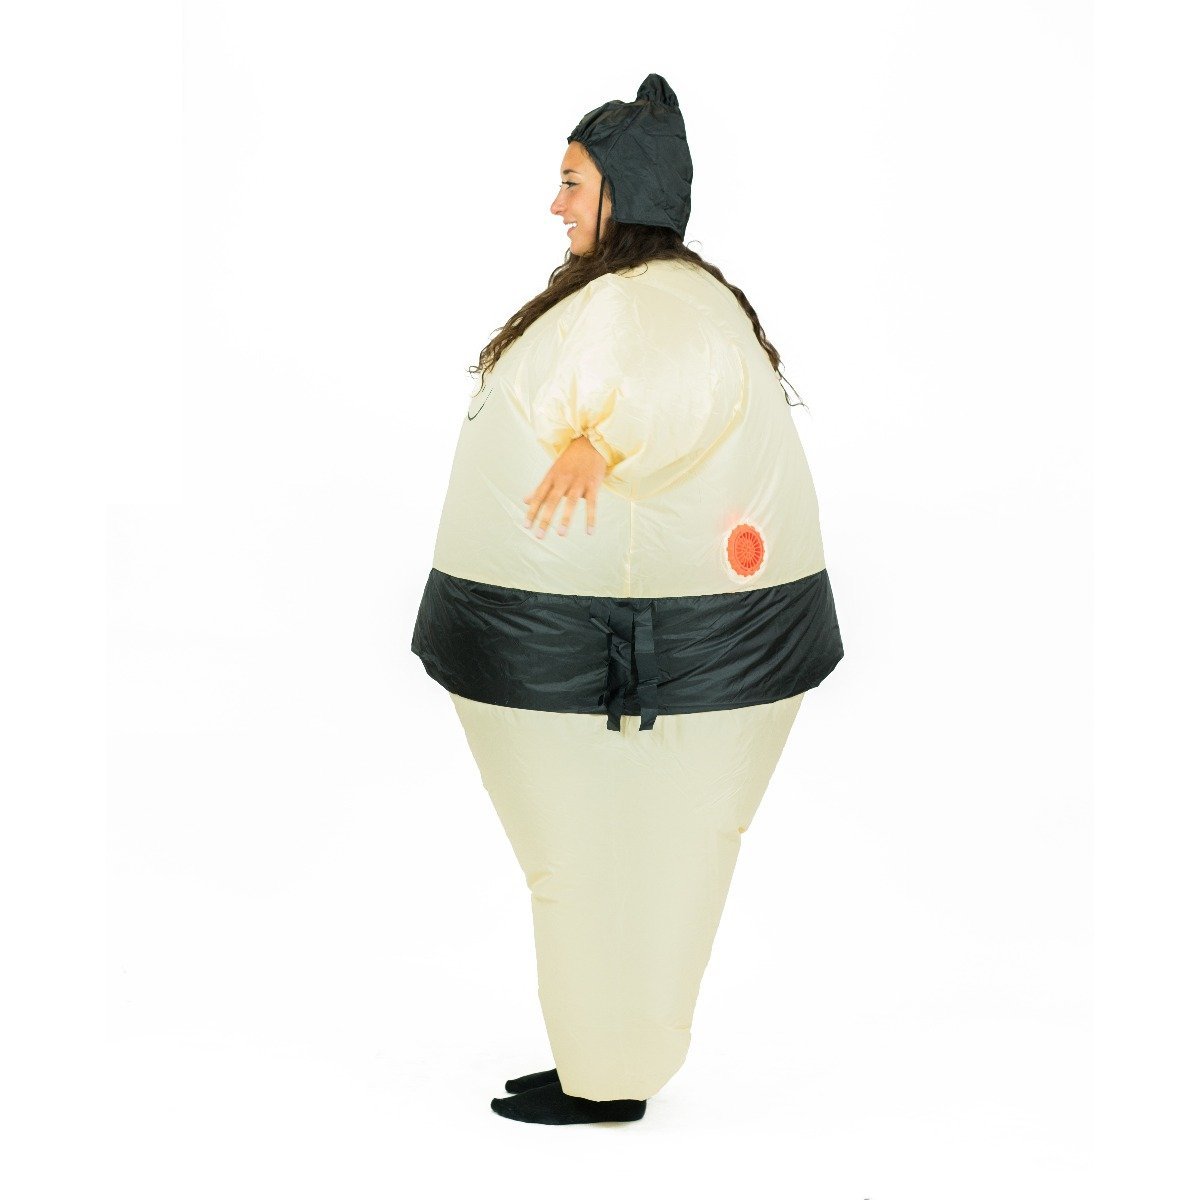 Bodysocks - Inflatable Sumo Wrestler Costume